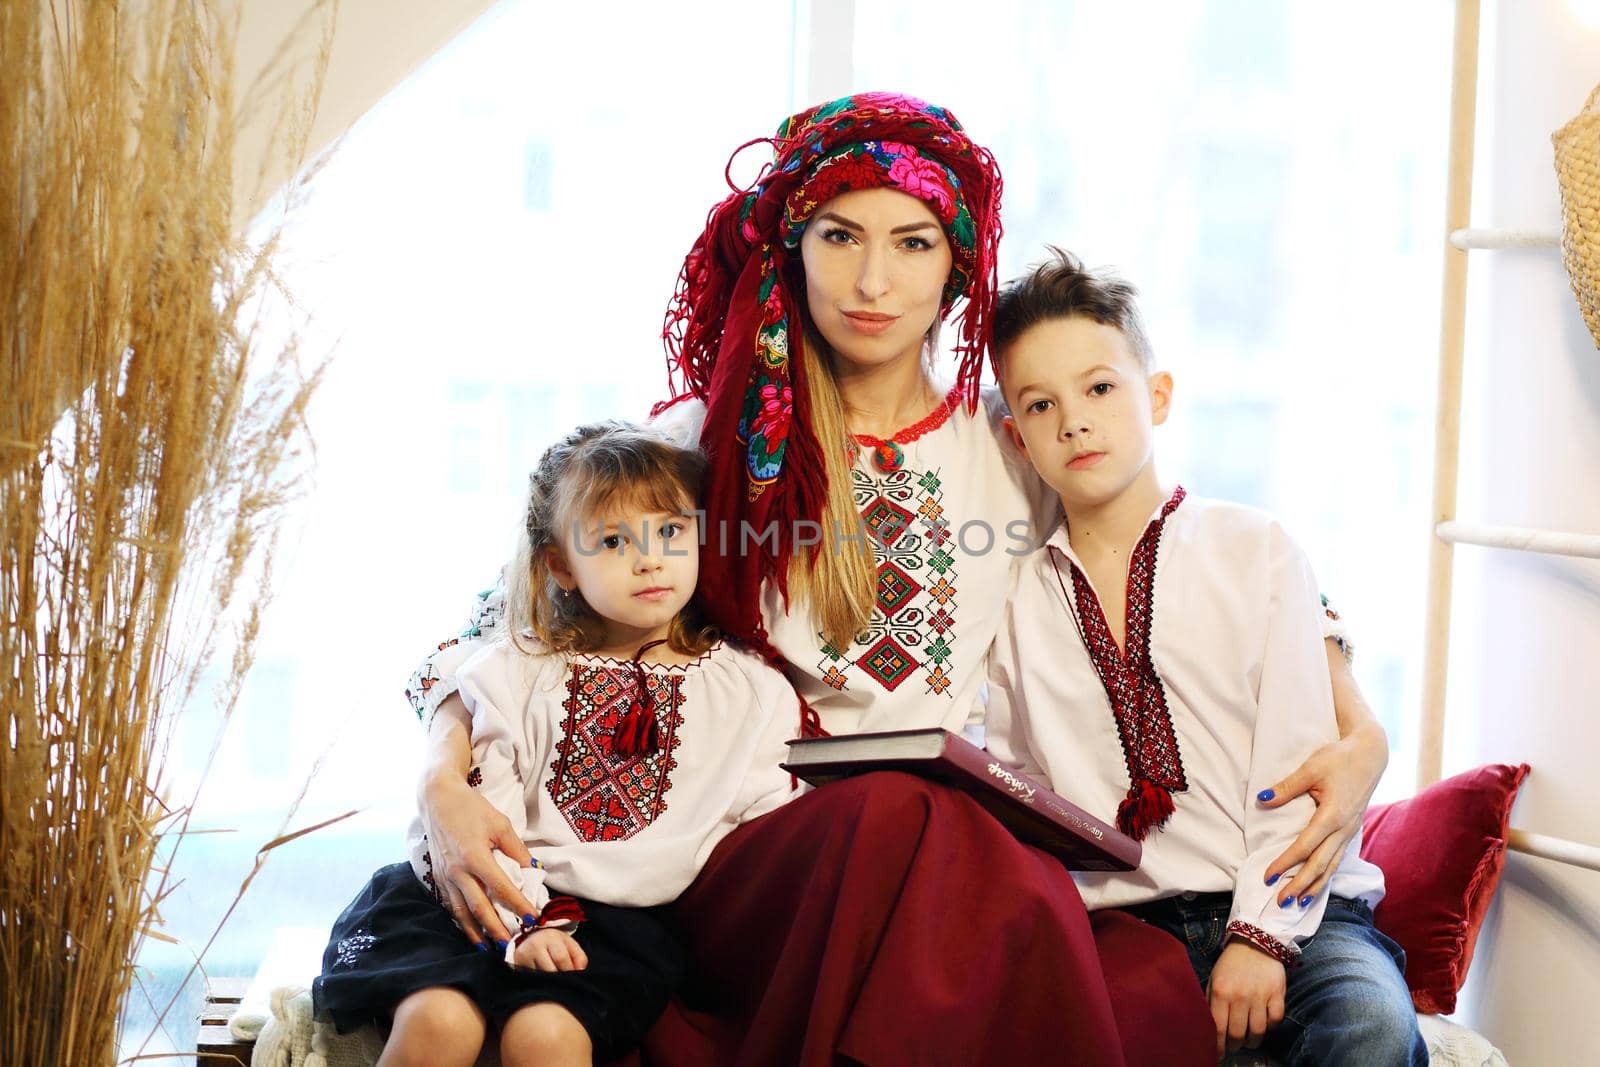 Ukraininan family wearing ethnic style embroidered shirt, modern derivative from traditional Ukrainian vyshyvanka. by IvanGalashchuk